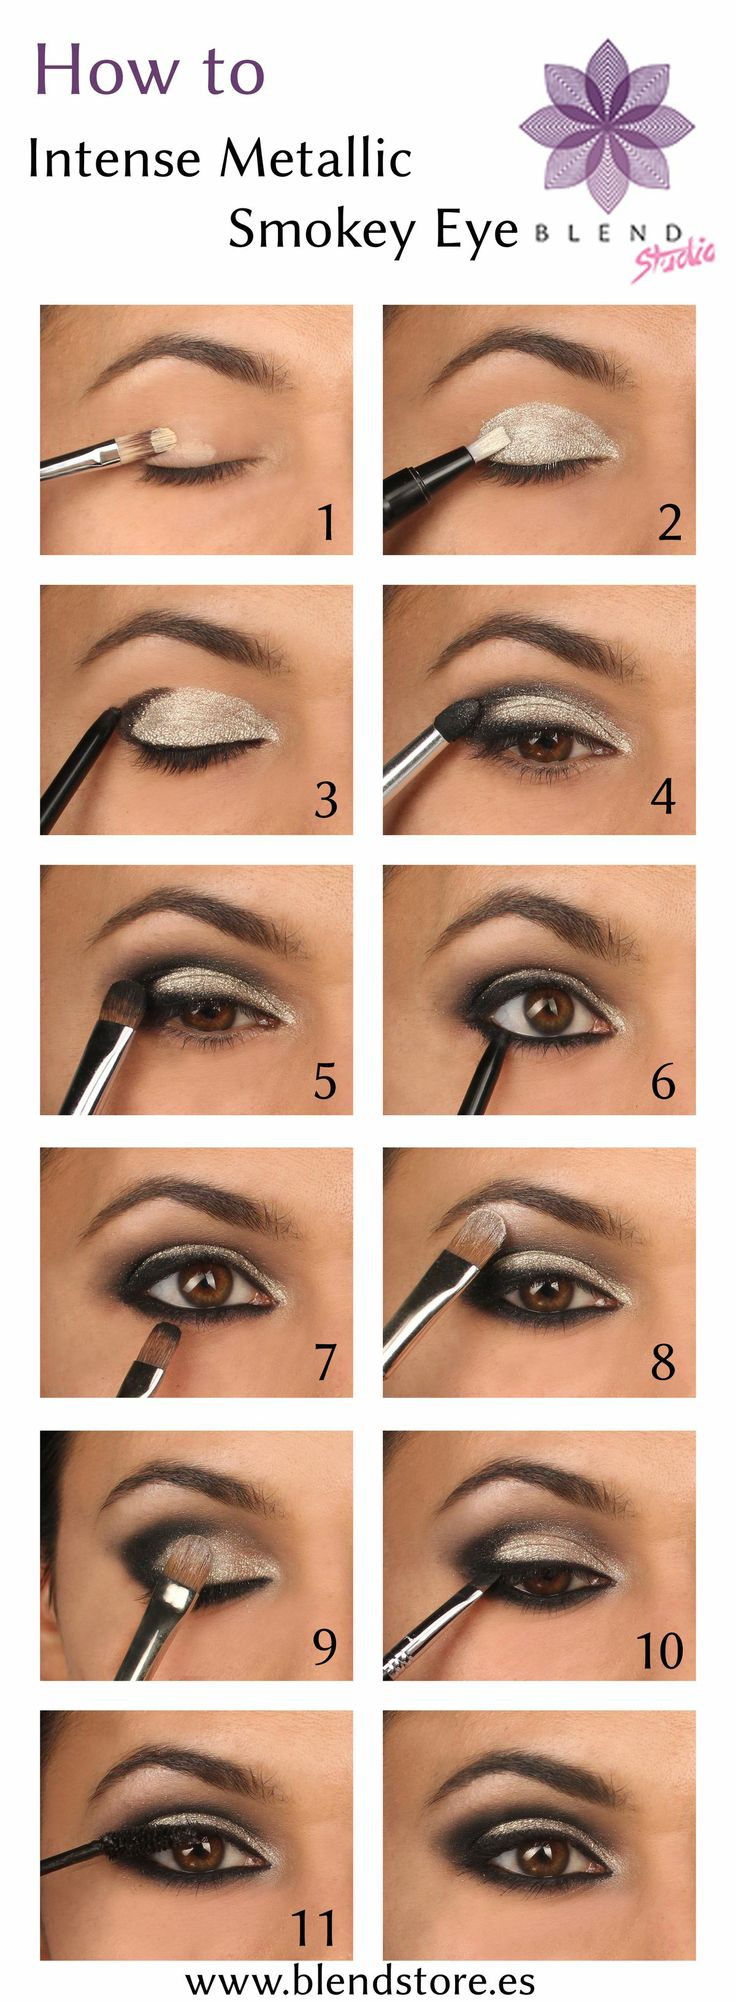 Best Smokey Eye Makeup For Brown Eyes 15 Smokey Eye Tutorials Step Step Guide To Perfect Hollywood Makeup